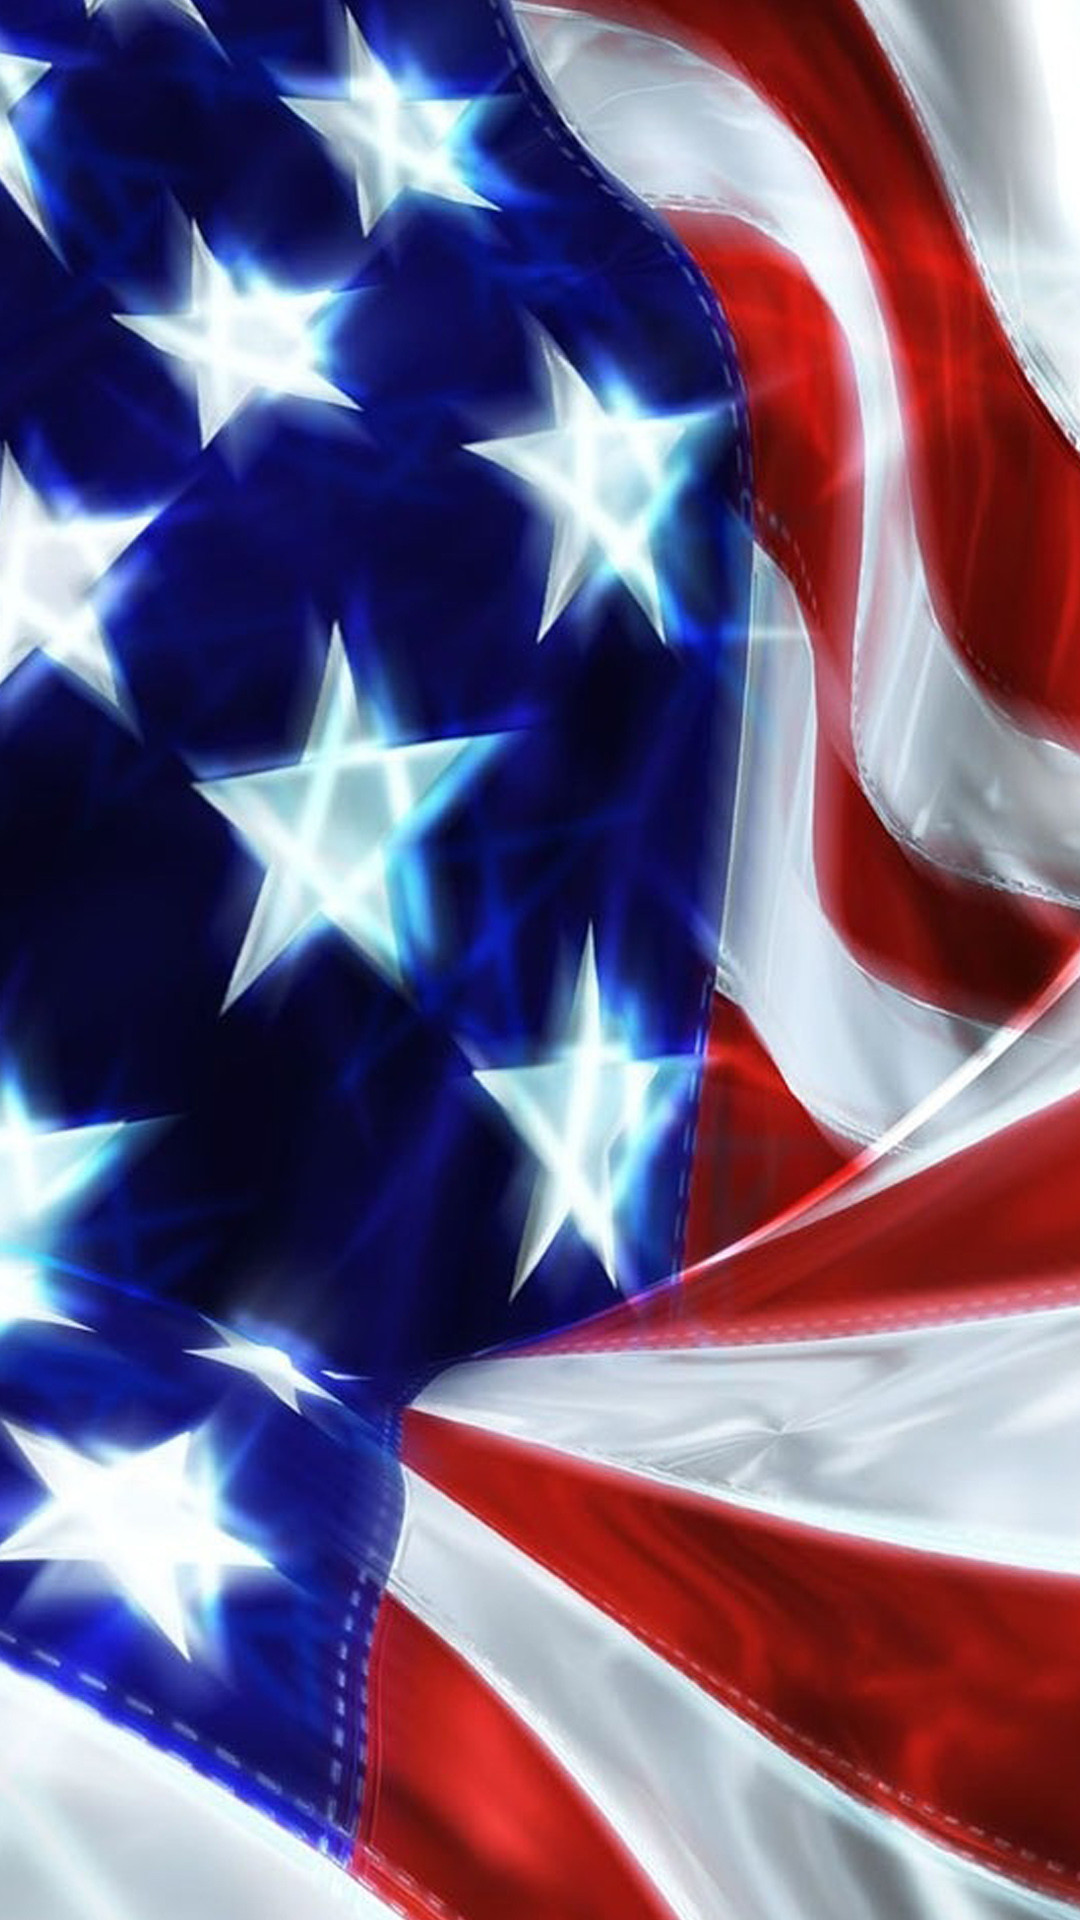 1080x1920 American Flag iphone 6 wallpaper tumblr